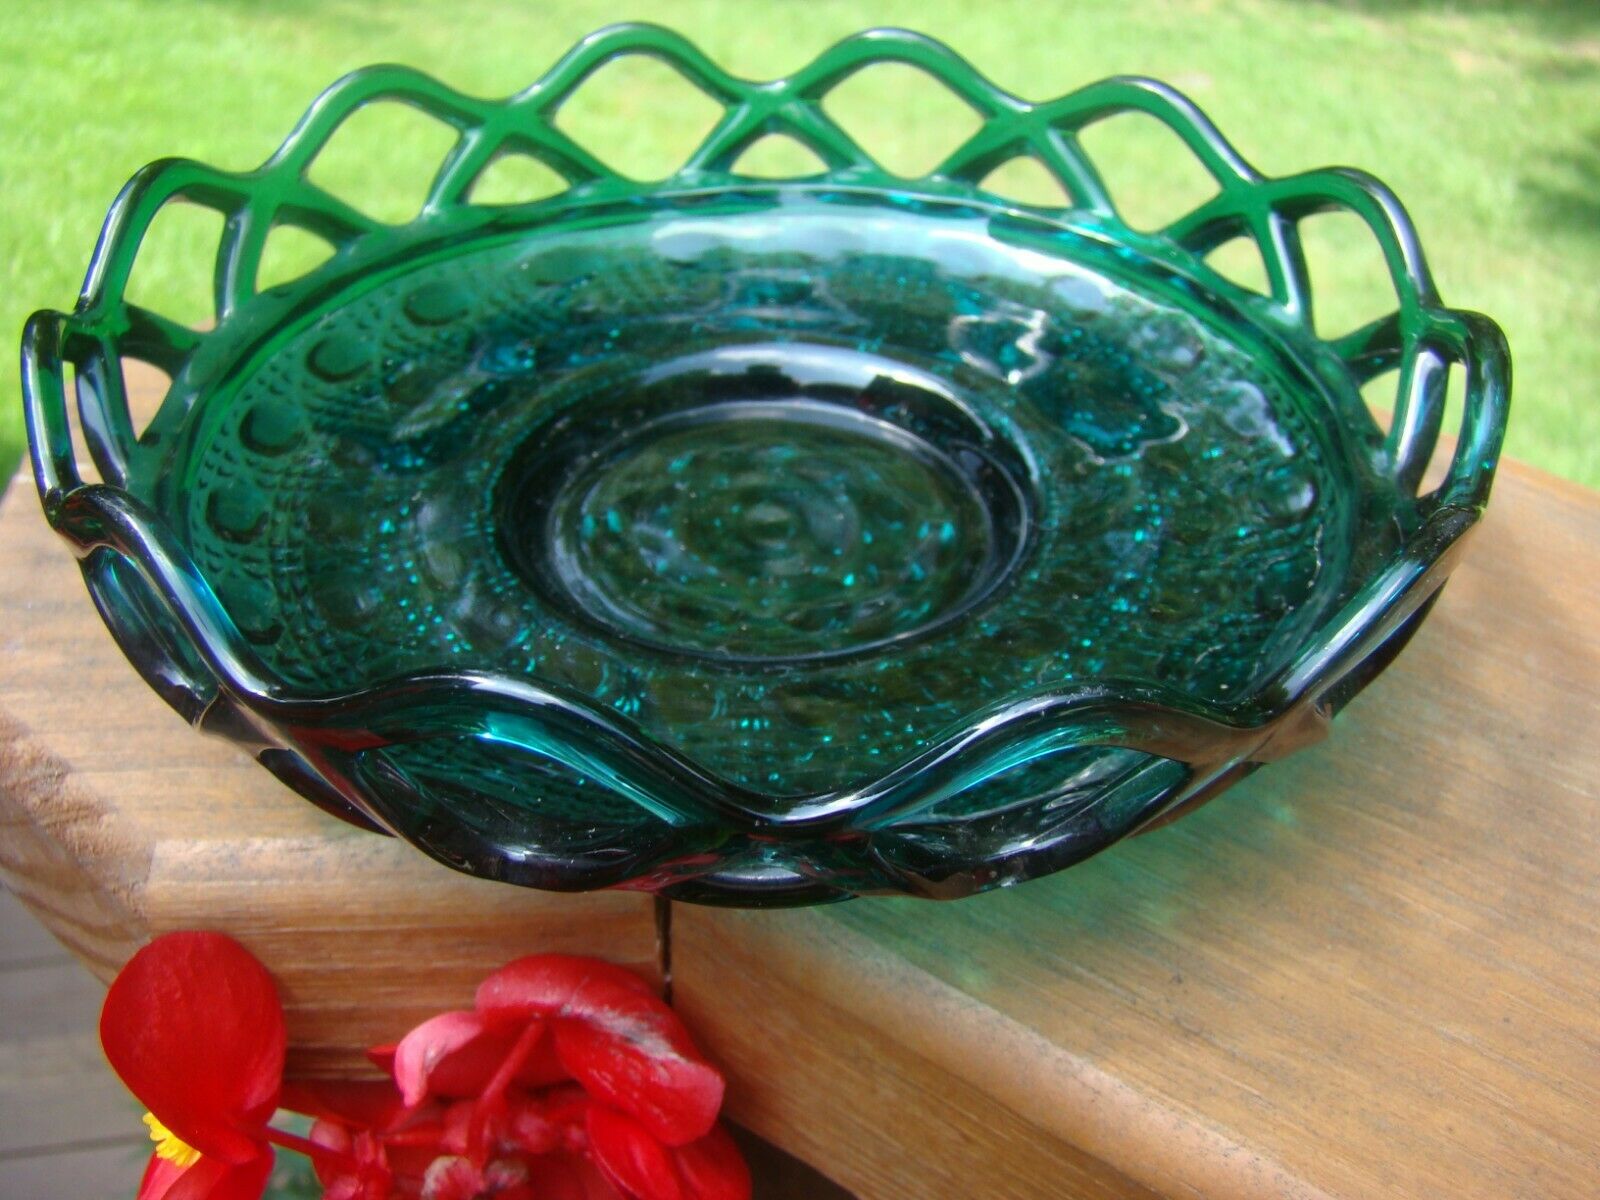 Antique Vintage Retro Laced Edge Stiegel-green Bowl Imperial Glass - 6"